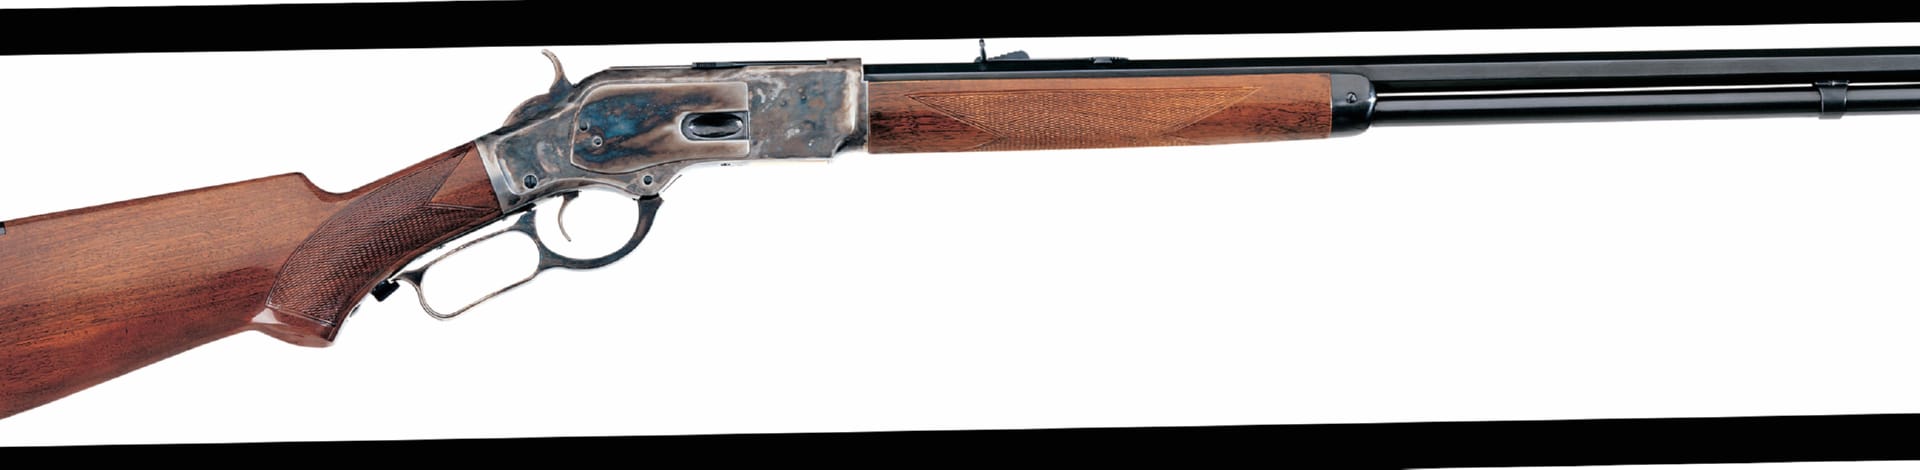 Uberti 1873 Rifle at 2048 x 2048 iPad size wallpapers HD quality